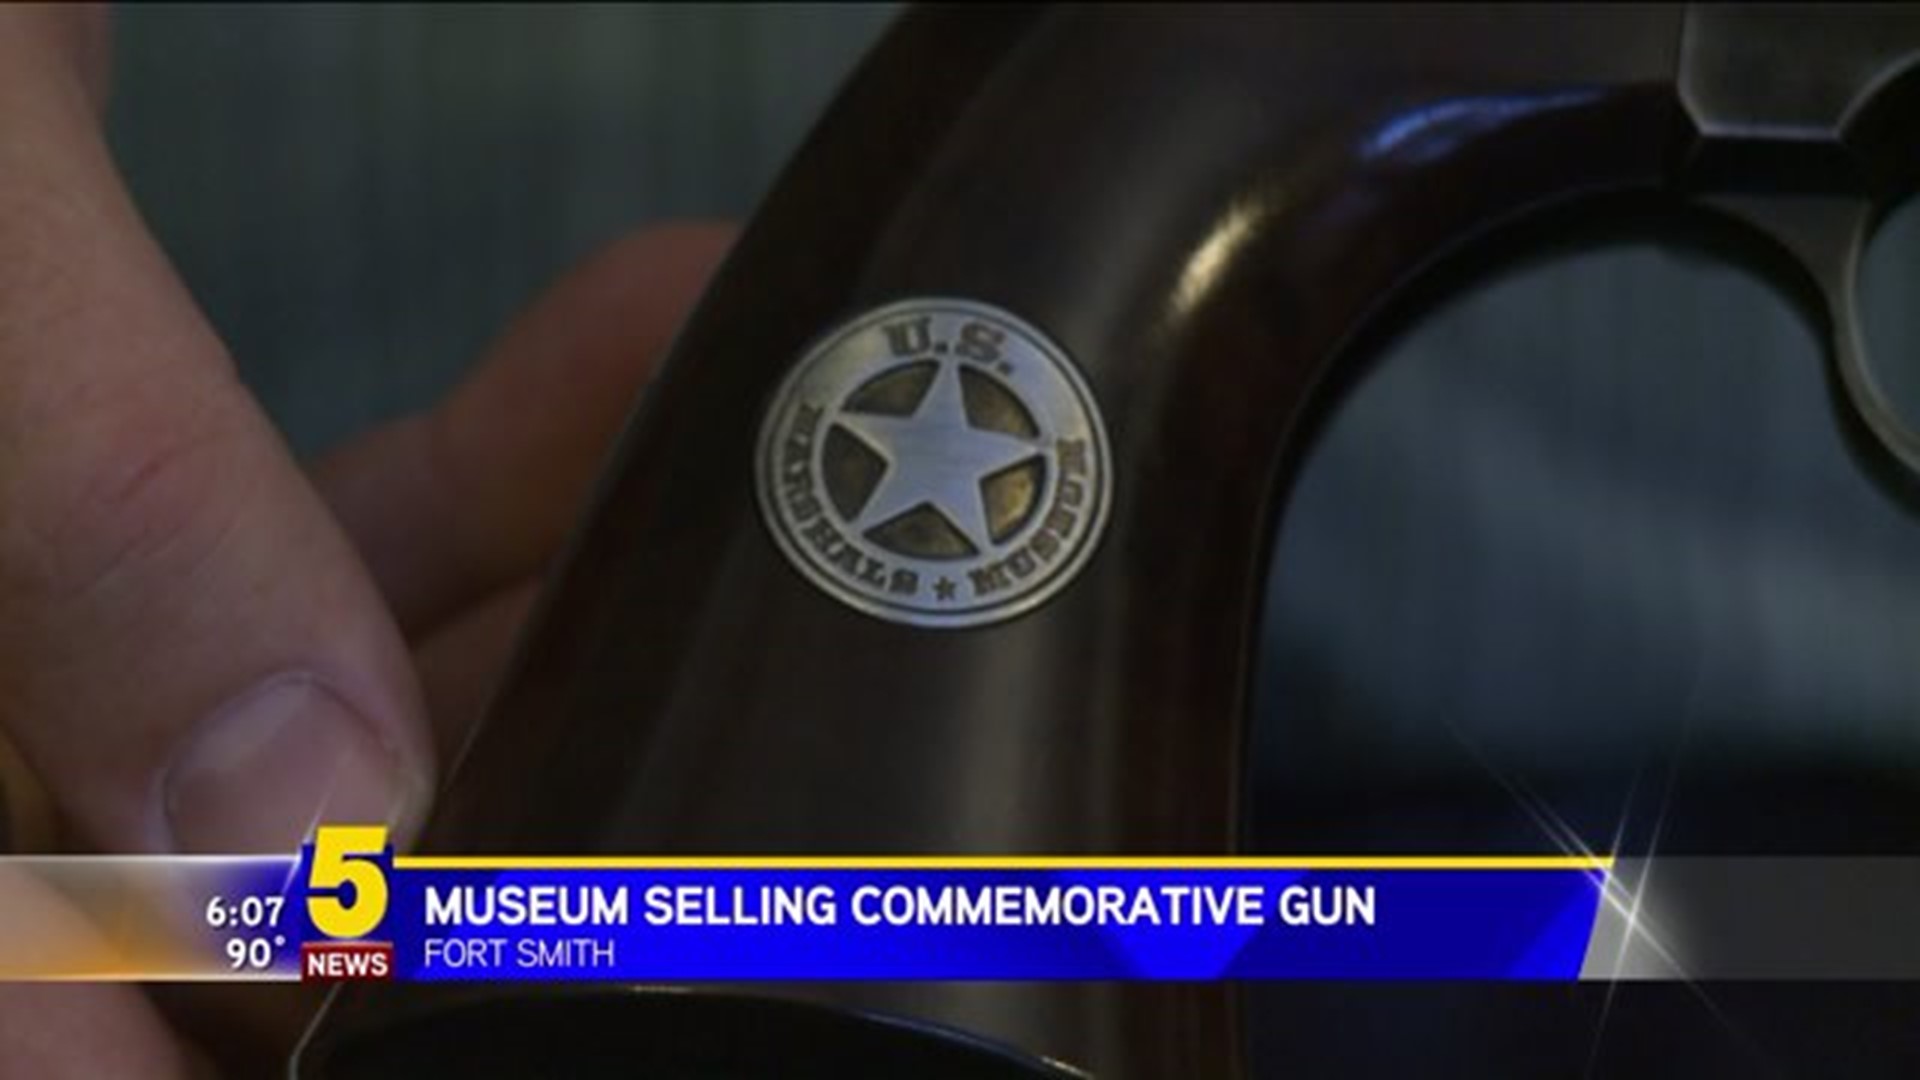 U.S. Marshals Museum Commemorative Gun